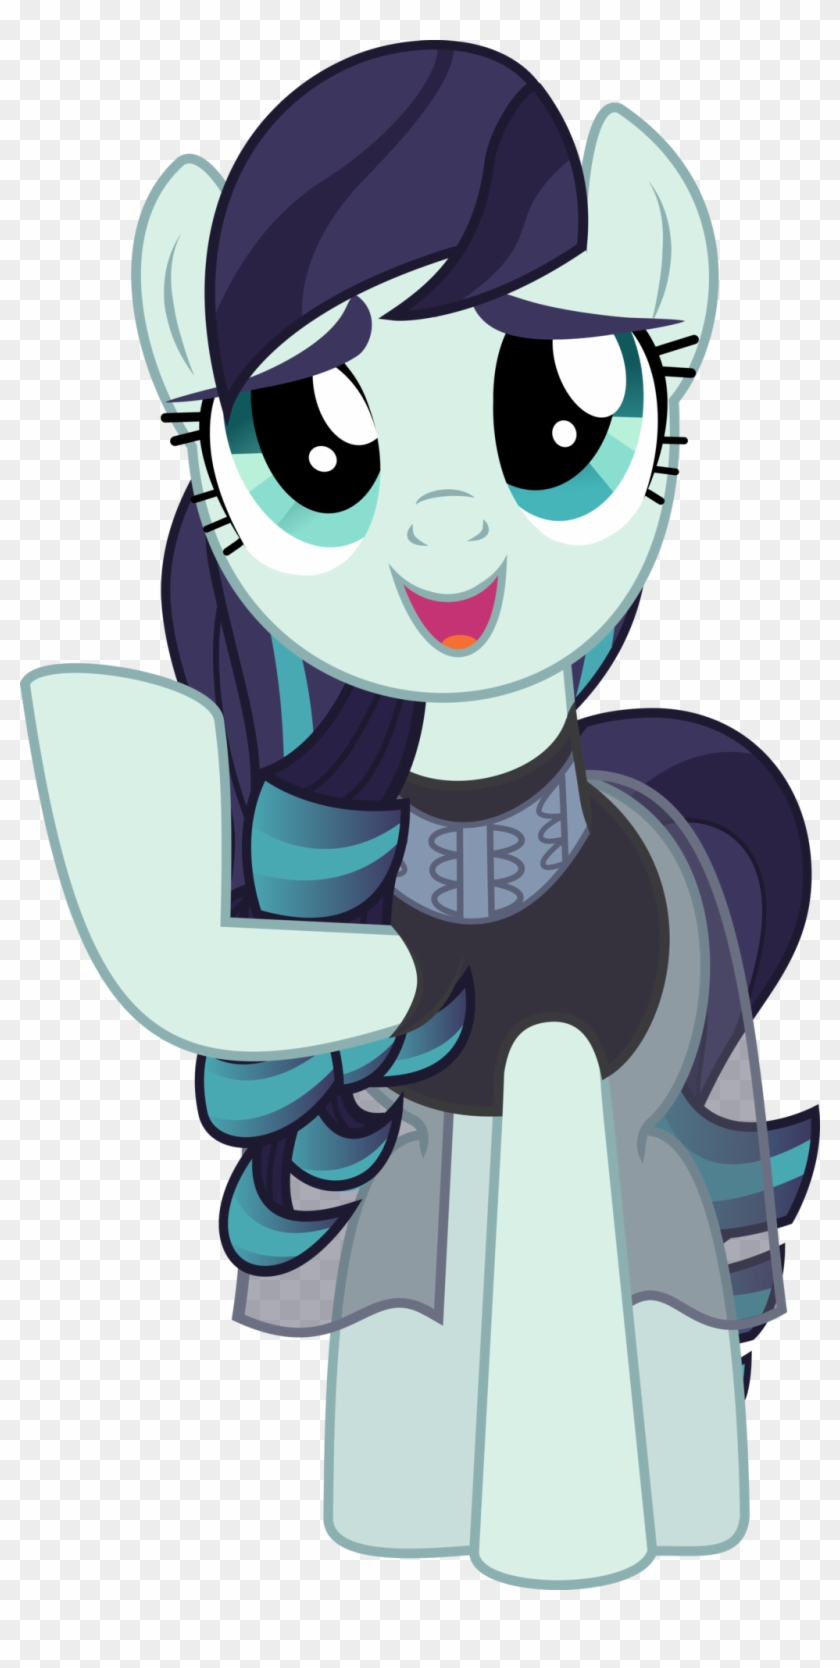 Mlp Vector - My Little Pony: Friendship Is Magic #1262690